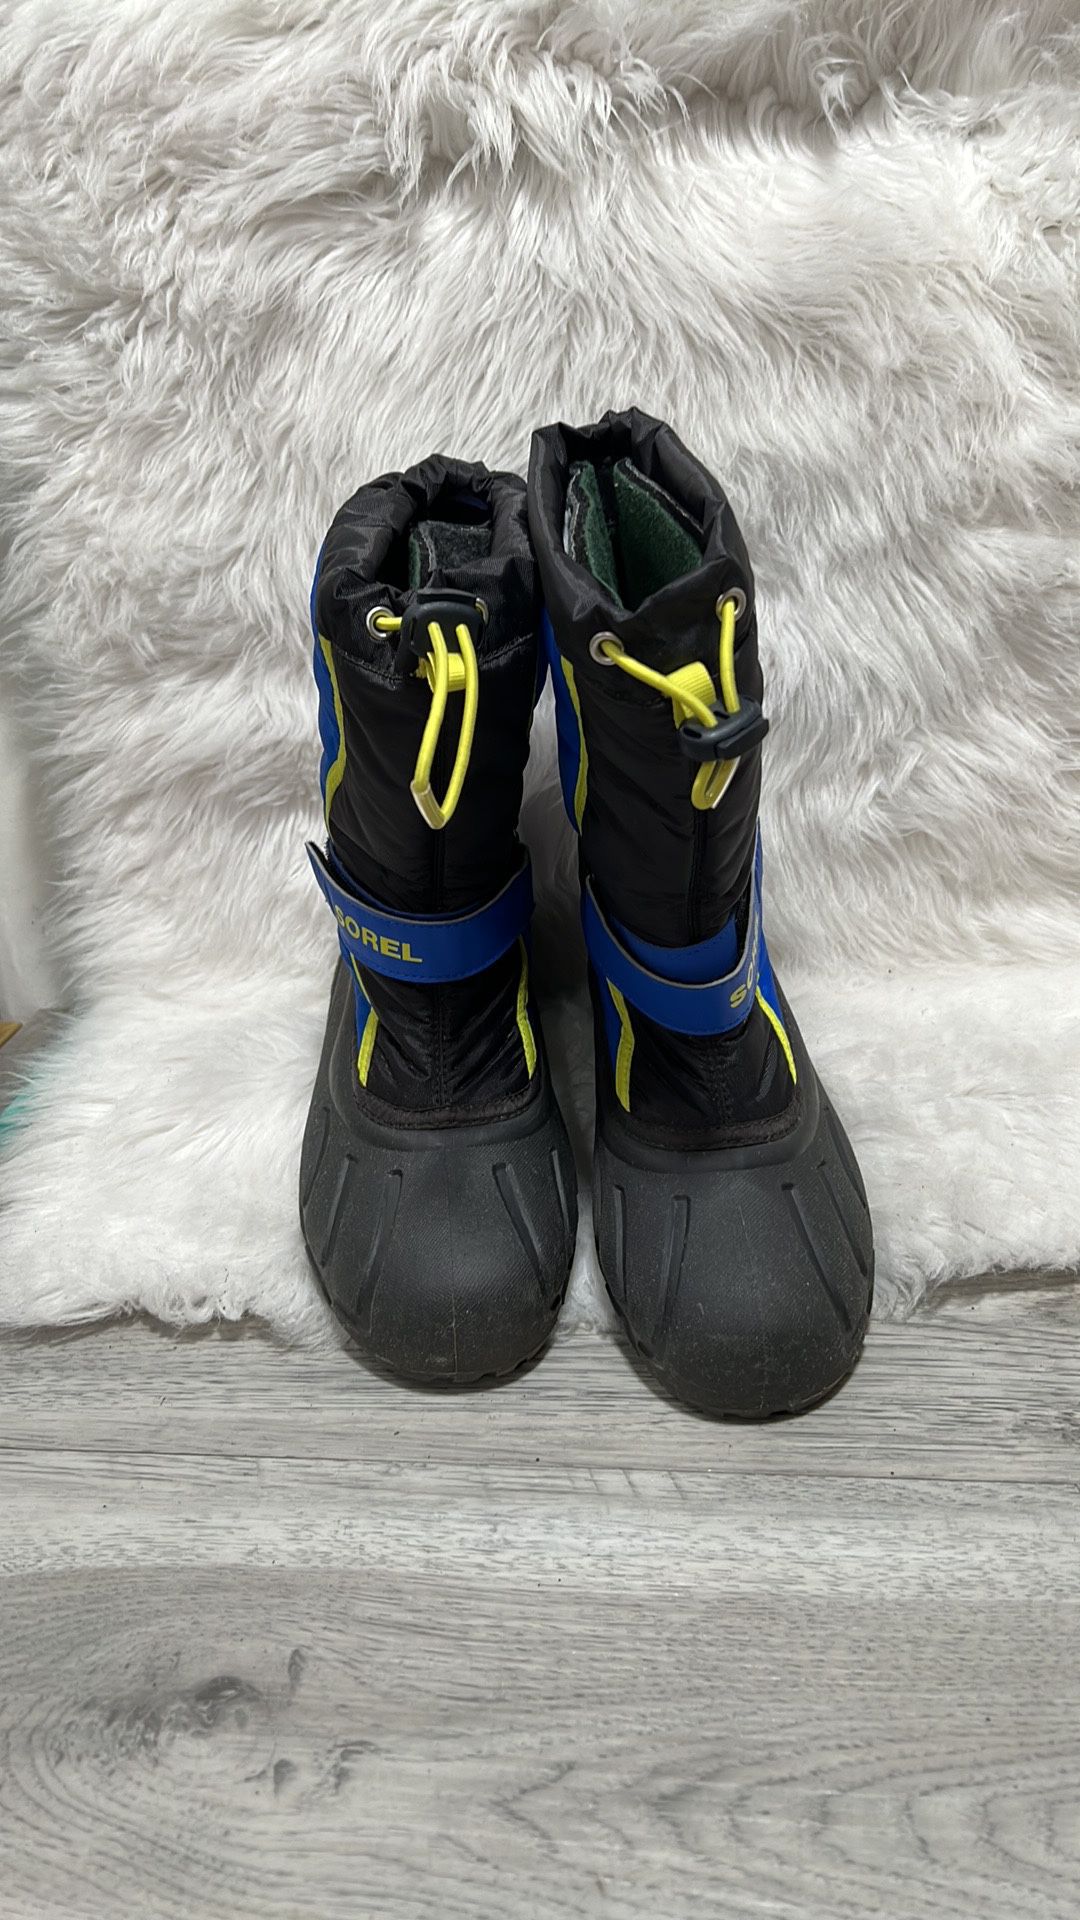 Sorel Flurry Weather Resistant Snow Boots Big Kids size 5